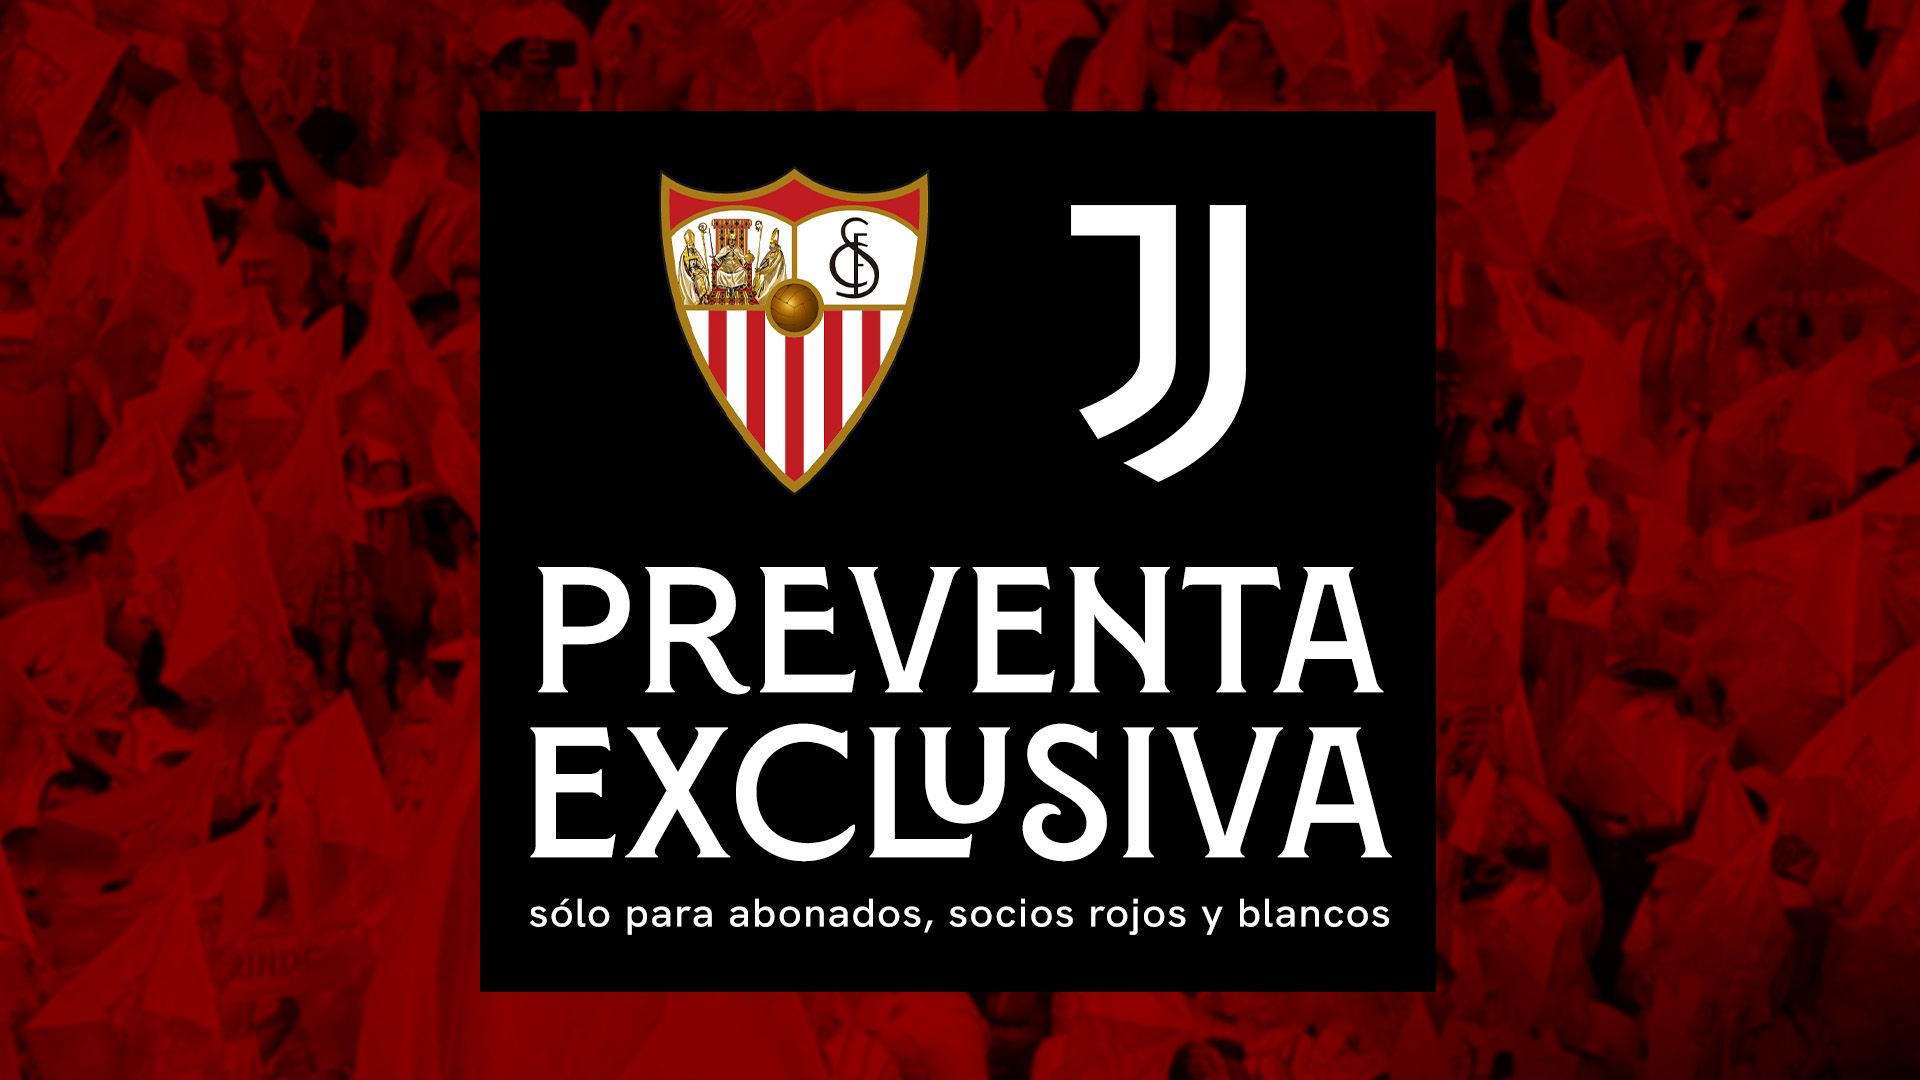 Preventa exclusiva para el Sevilla FC-Juventus FC